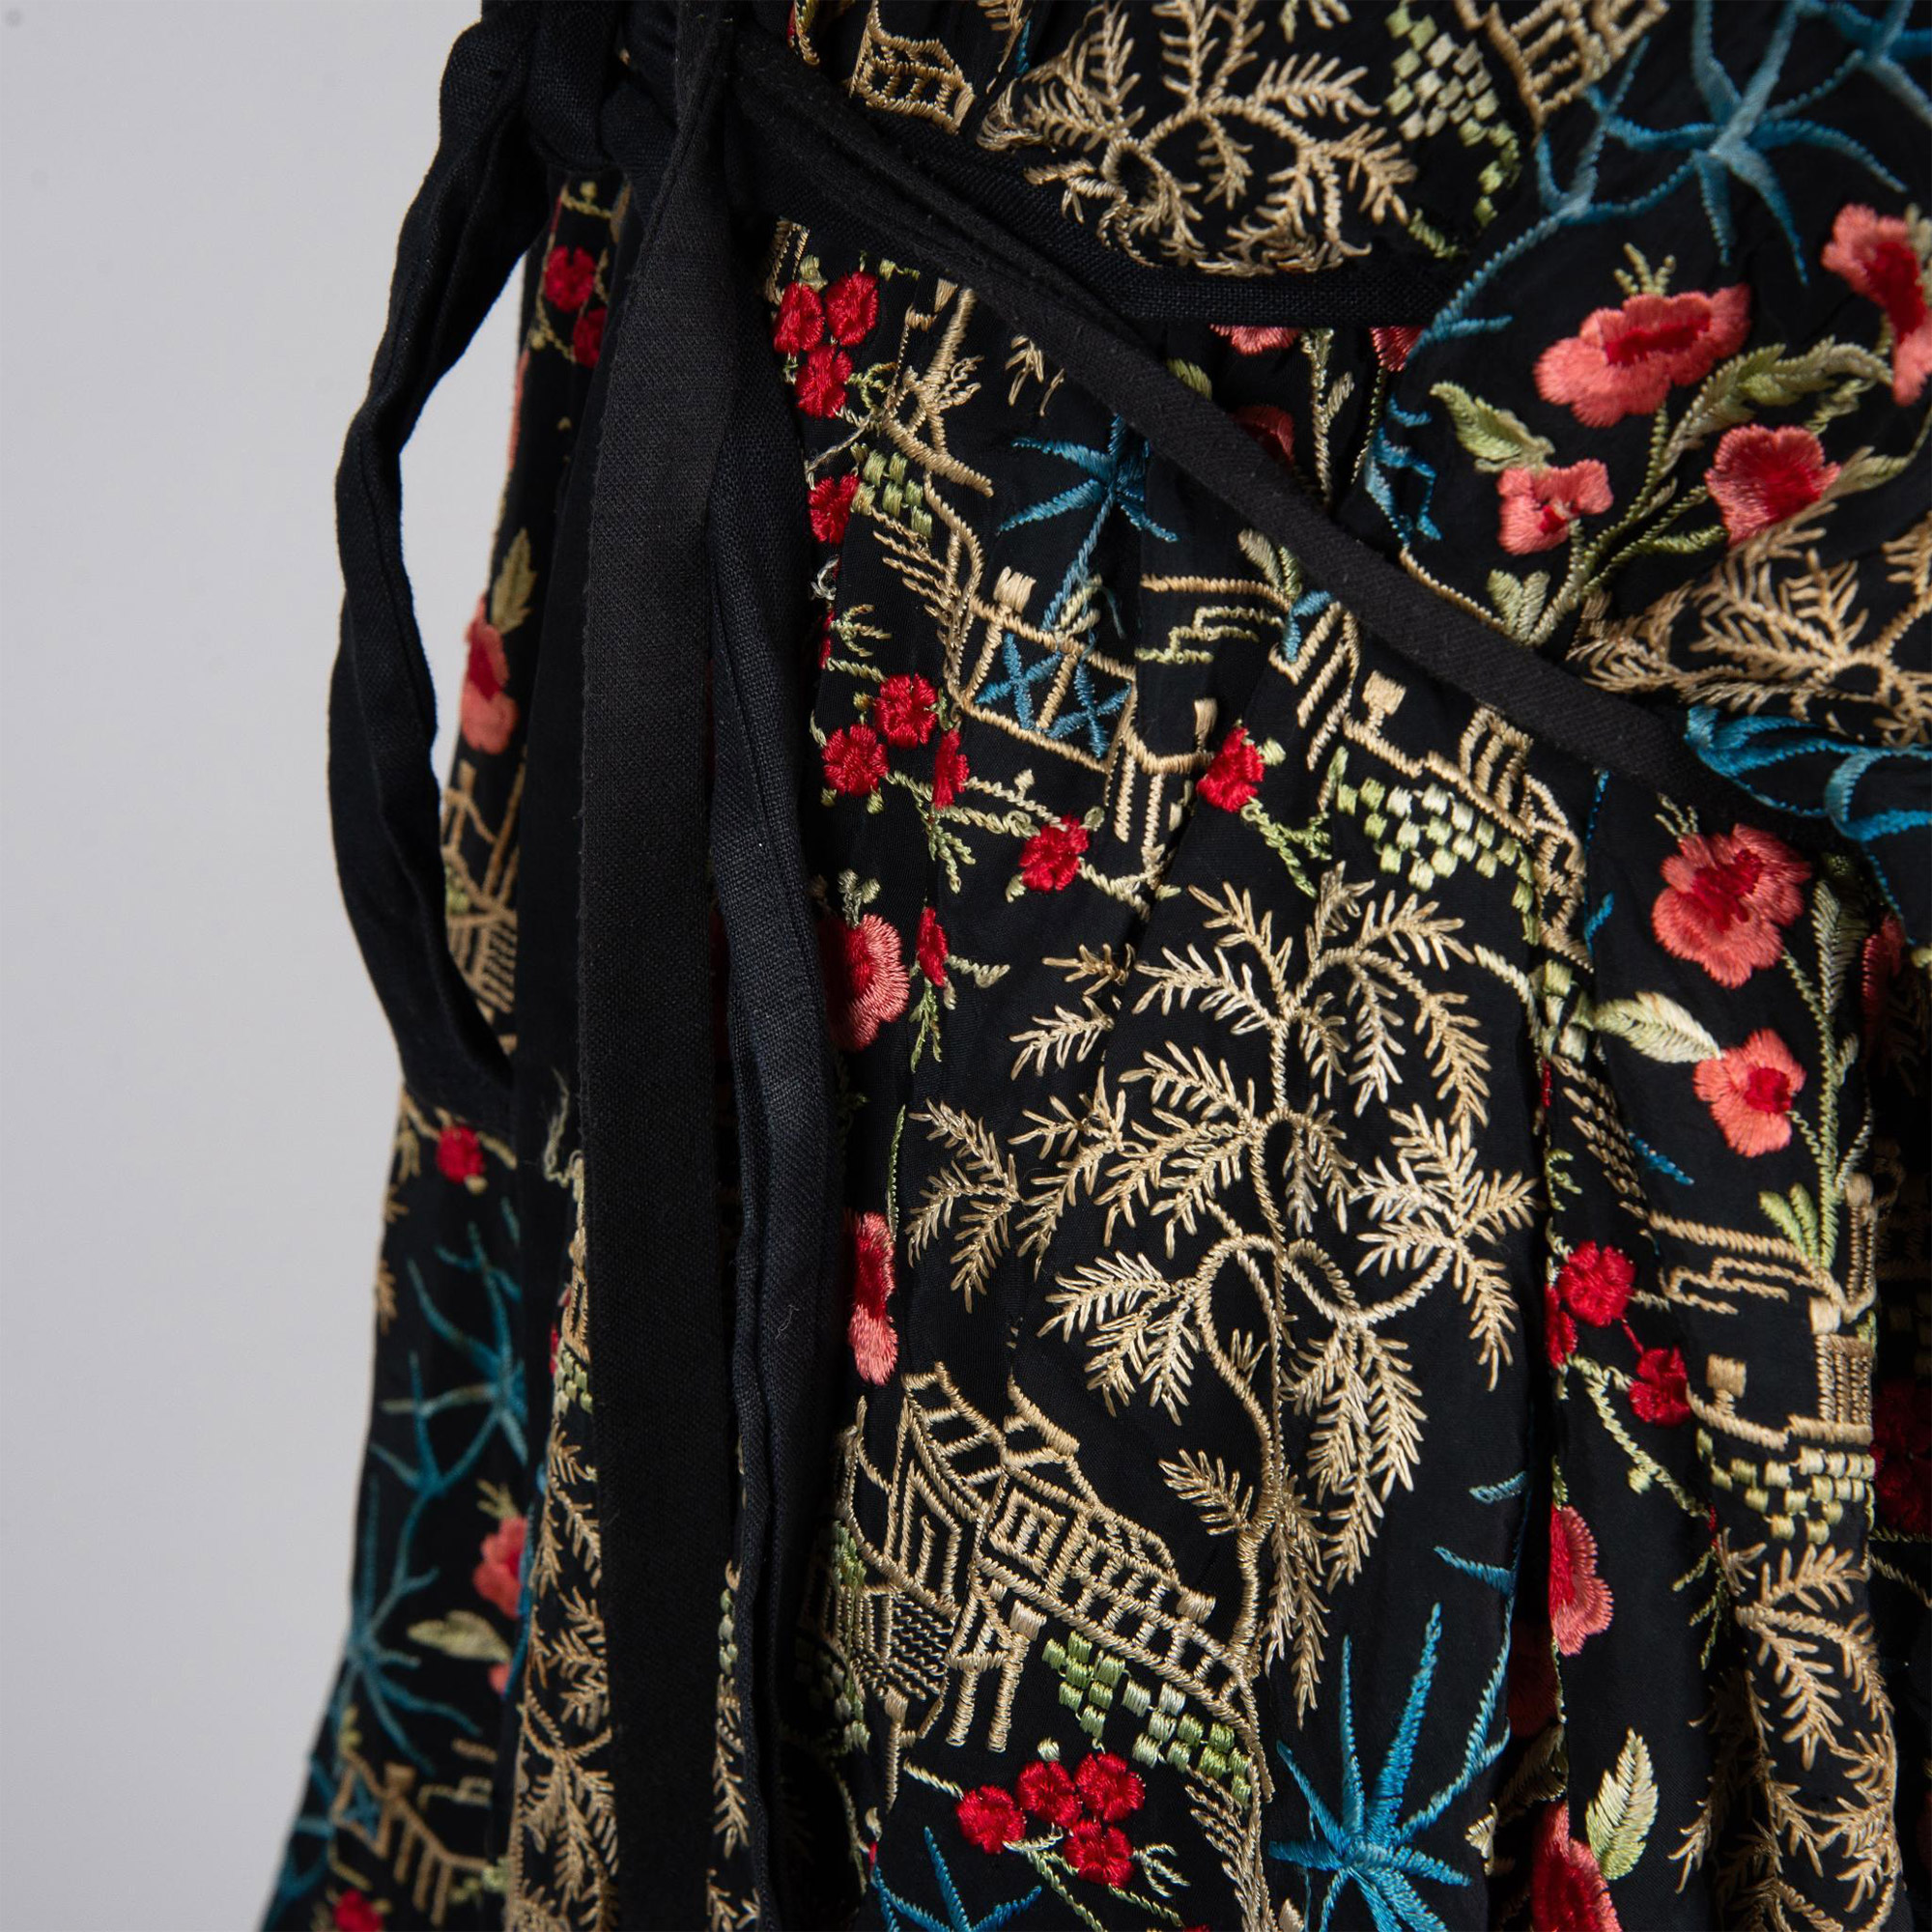 Japanese Embroidered Robe, Size Medium - Image 8 of 8